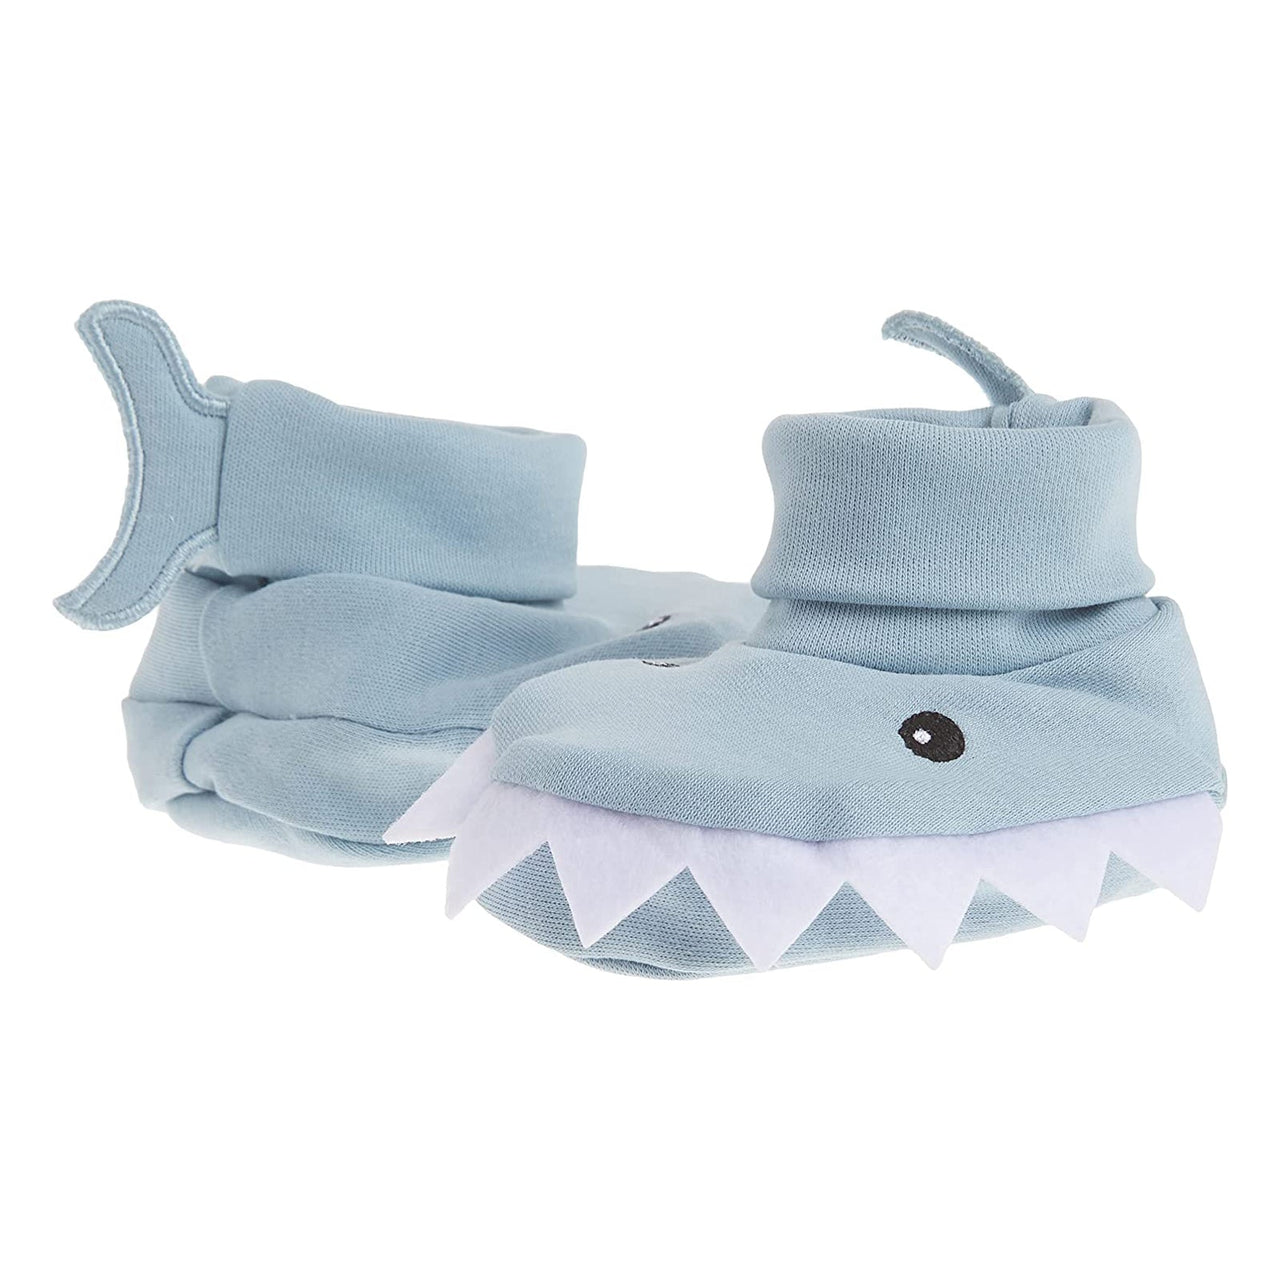 Chomp & Stomp Shark Bib and Booties Gift Set